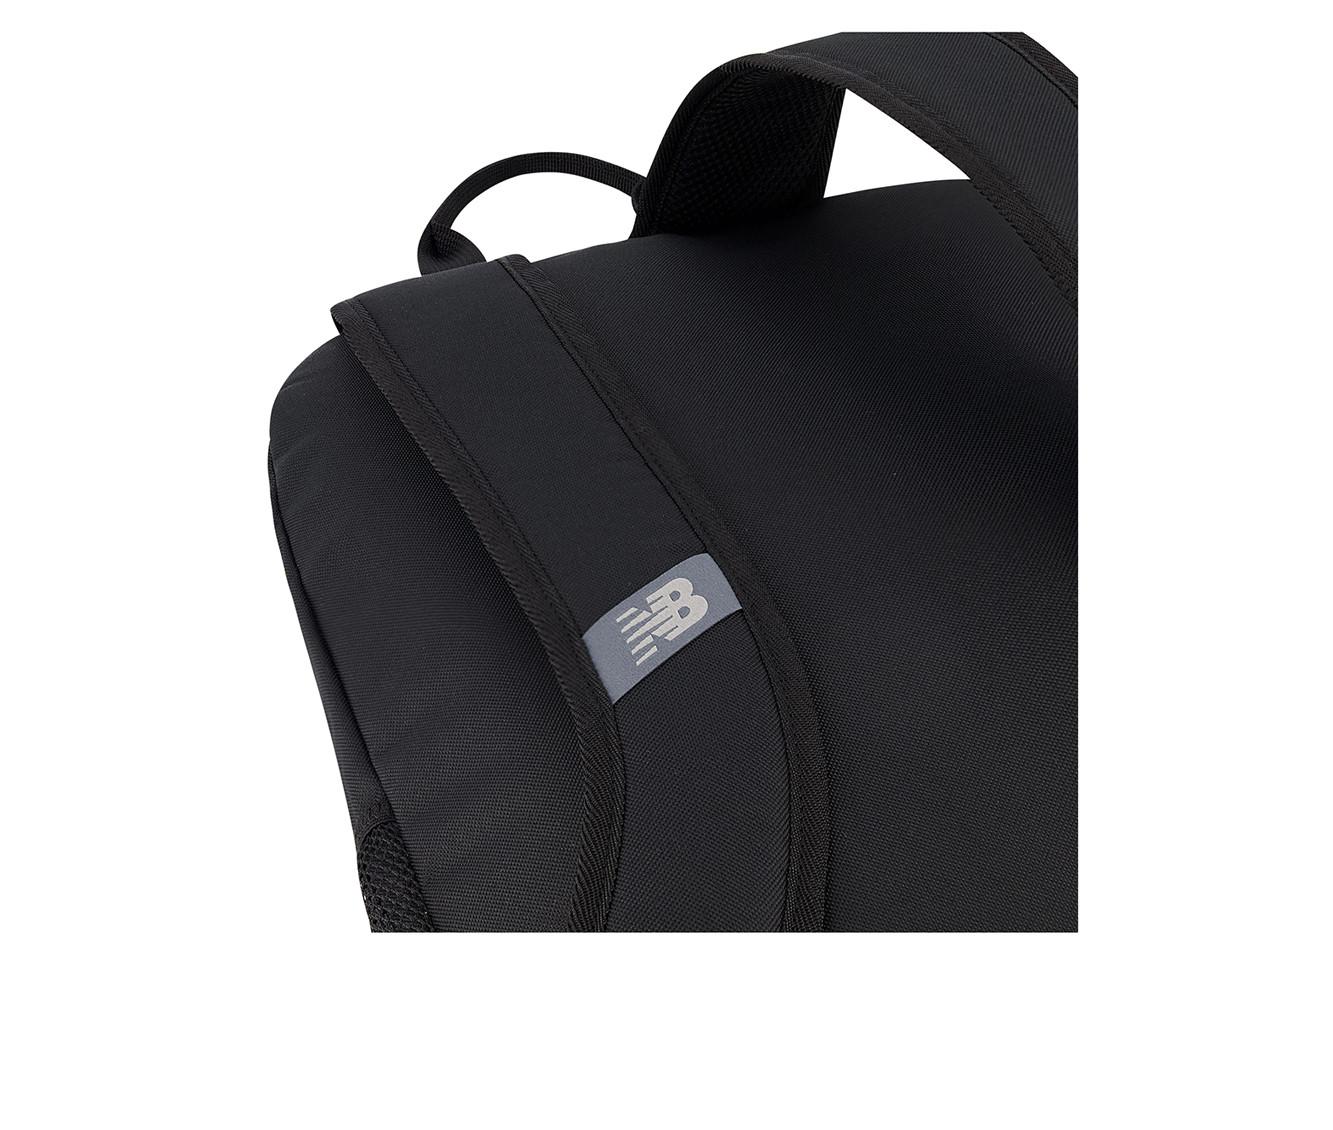 New Balance 19" Laptop Backpack